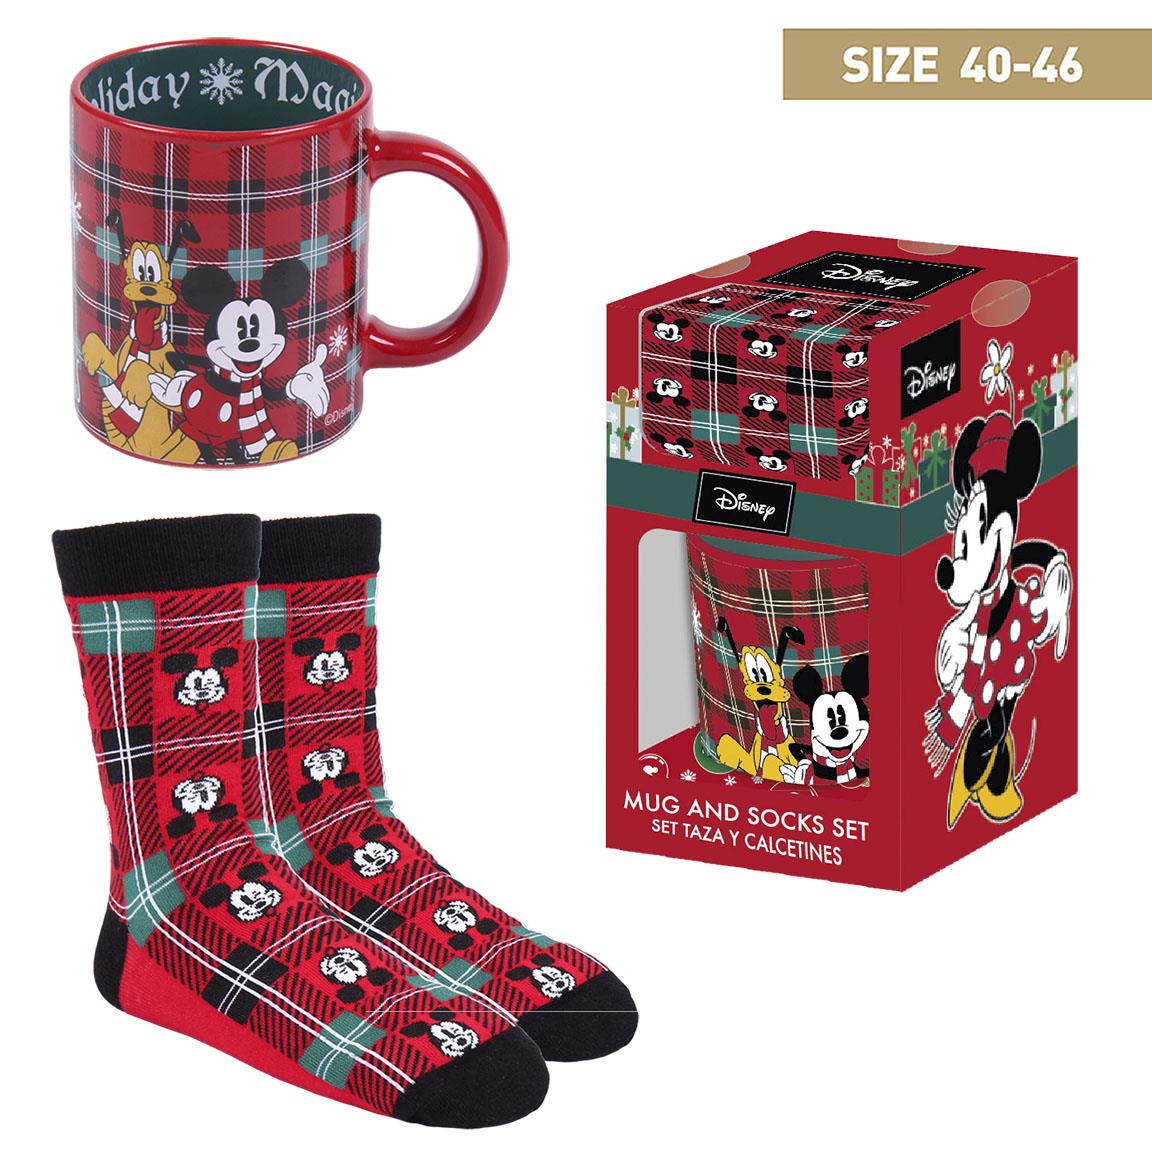 Disney Goofy and Pluto Socks 35 